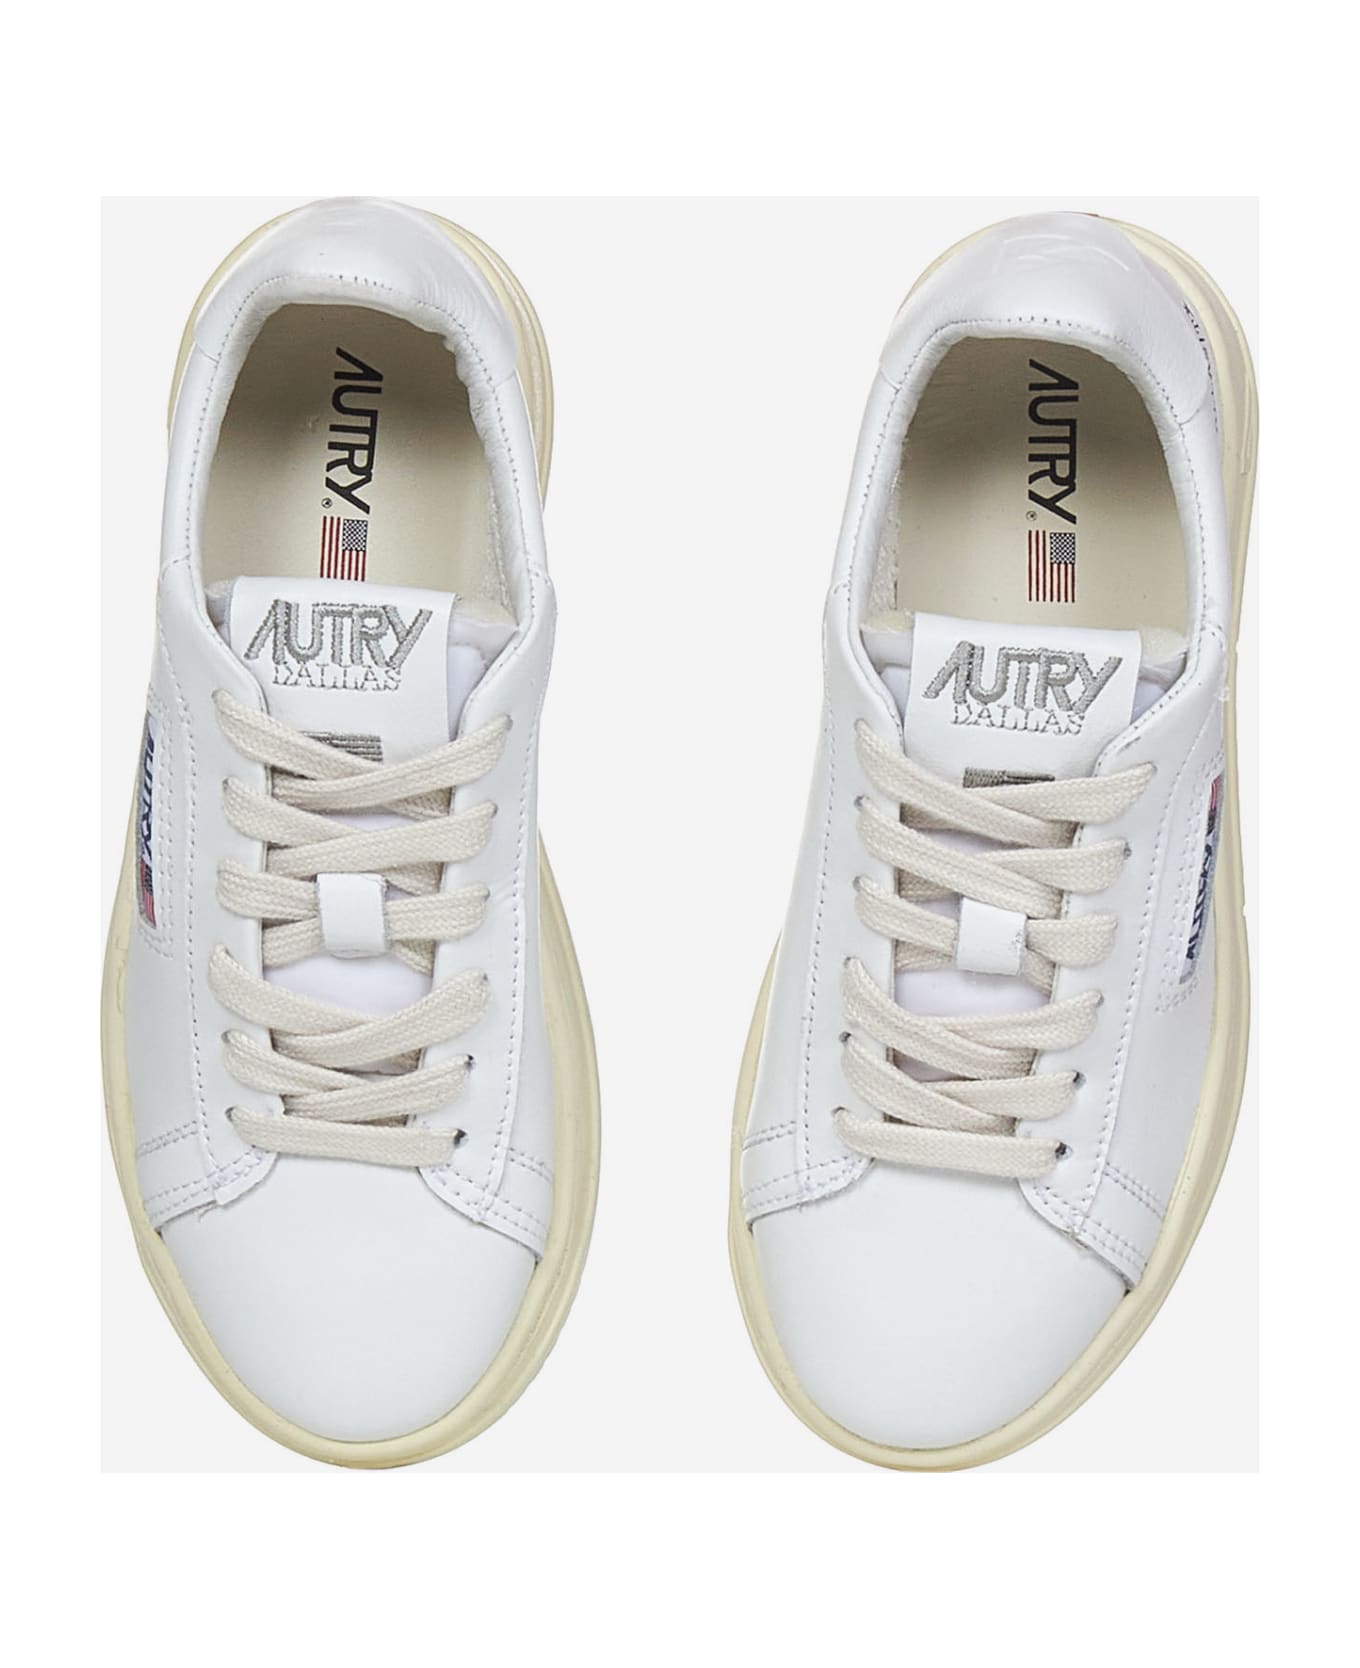 Autry Kids Dallas Low Sneakers - White